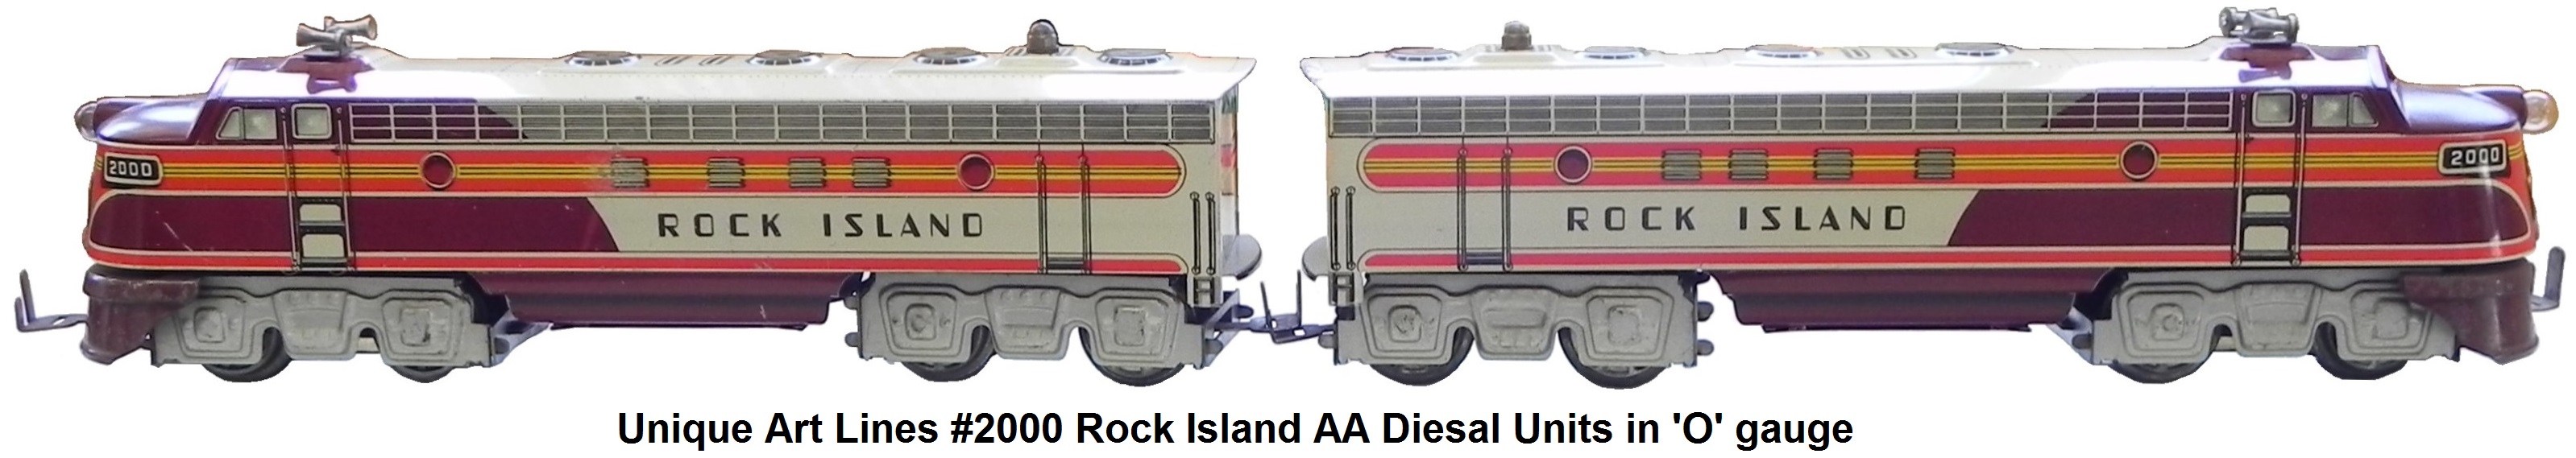 Unique Lines Rock Island tinplate lithographed 'O' gauge diesal locomotive